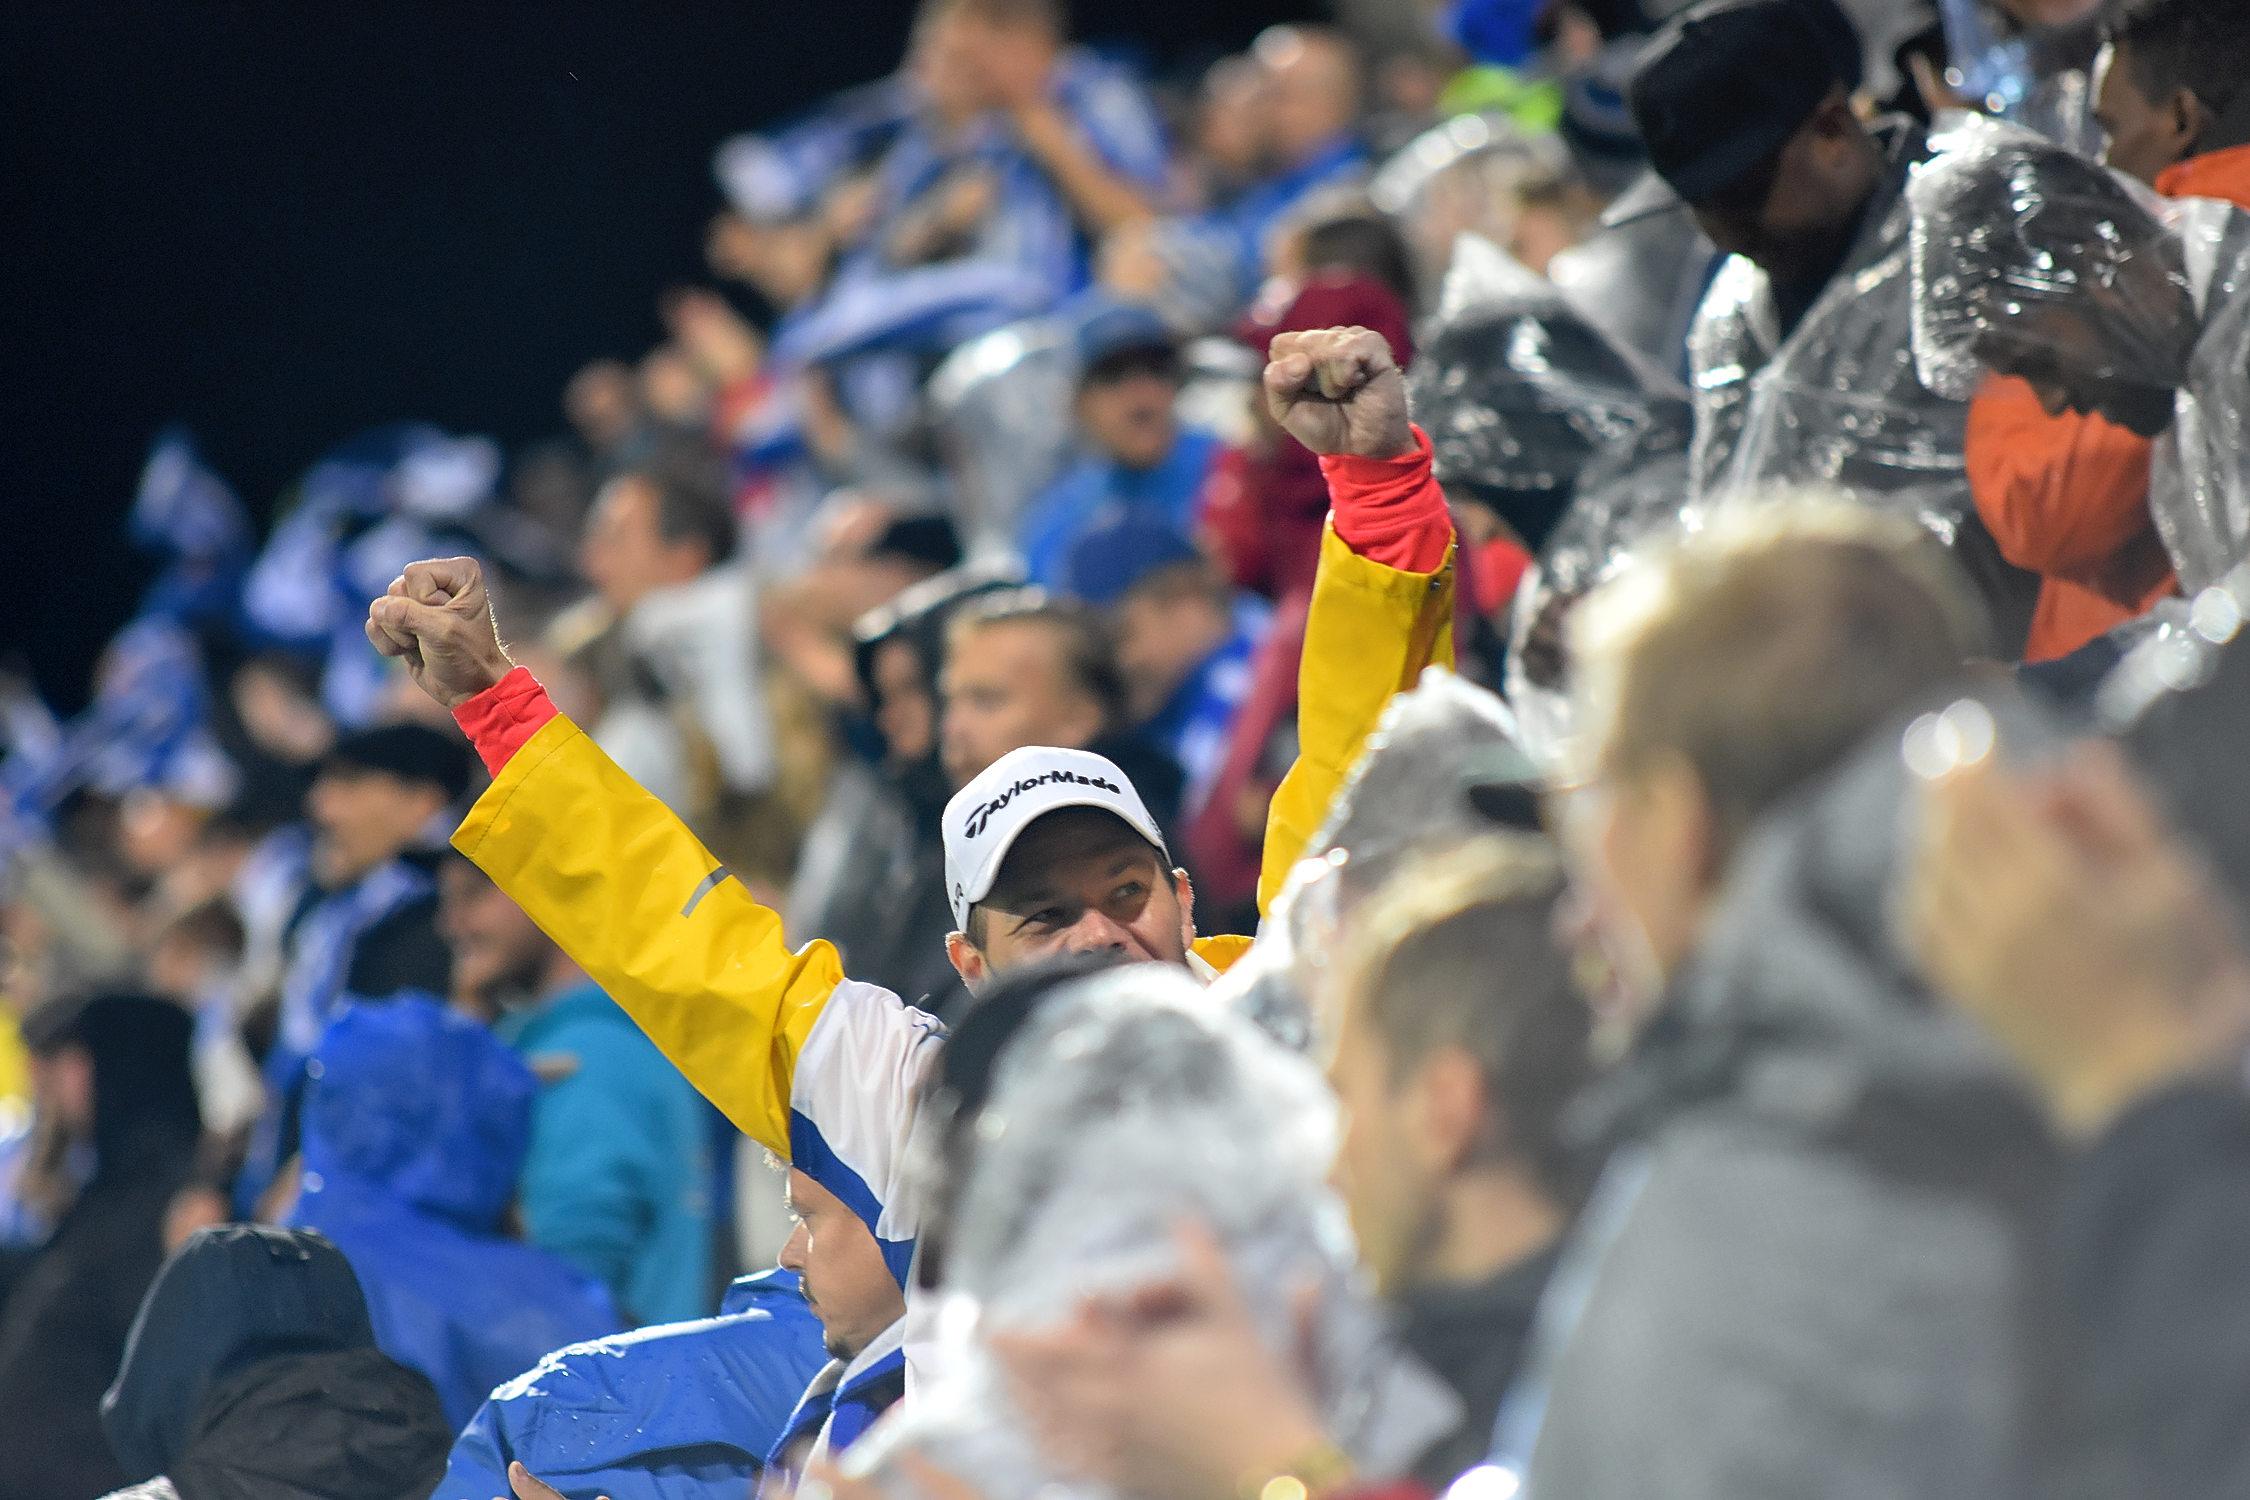 Publik heijjar på Finlands fotbollslandslag 